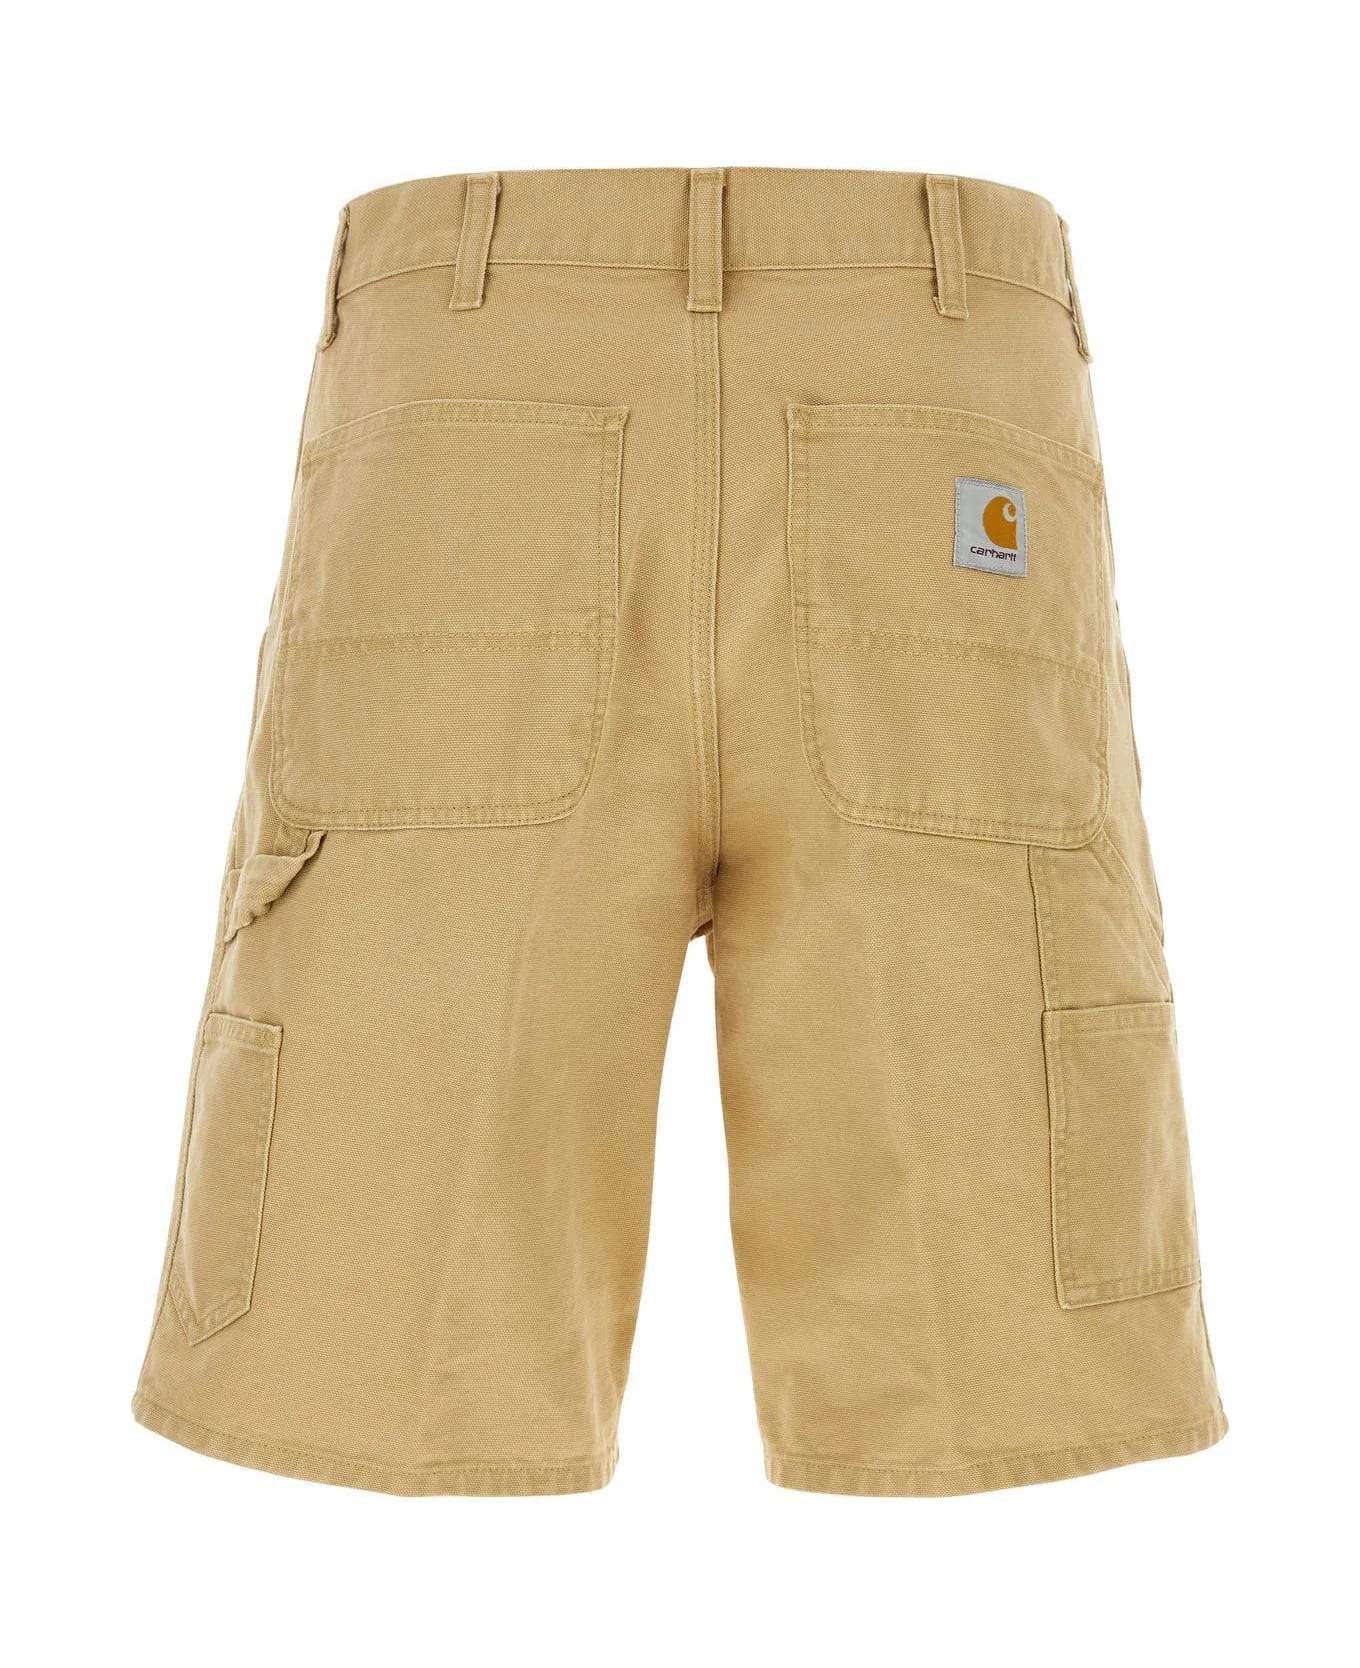 Carhartt WIP Beige Cotton Single Knee Short - Beige ショートパンツ